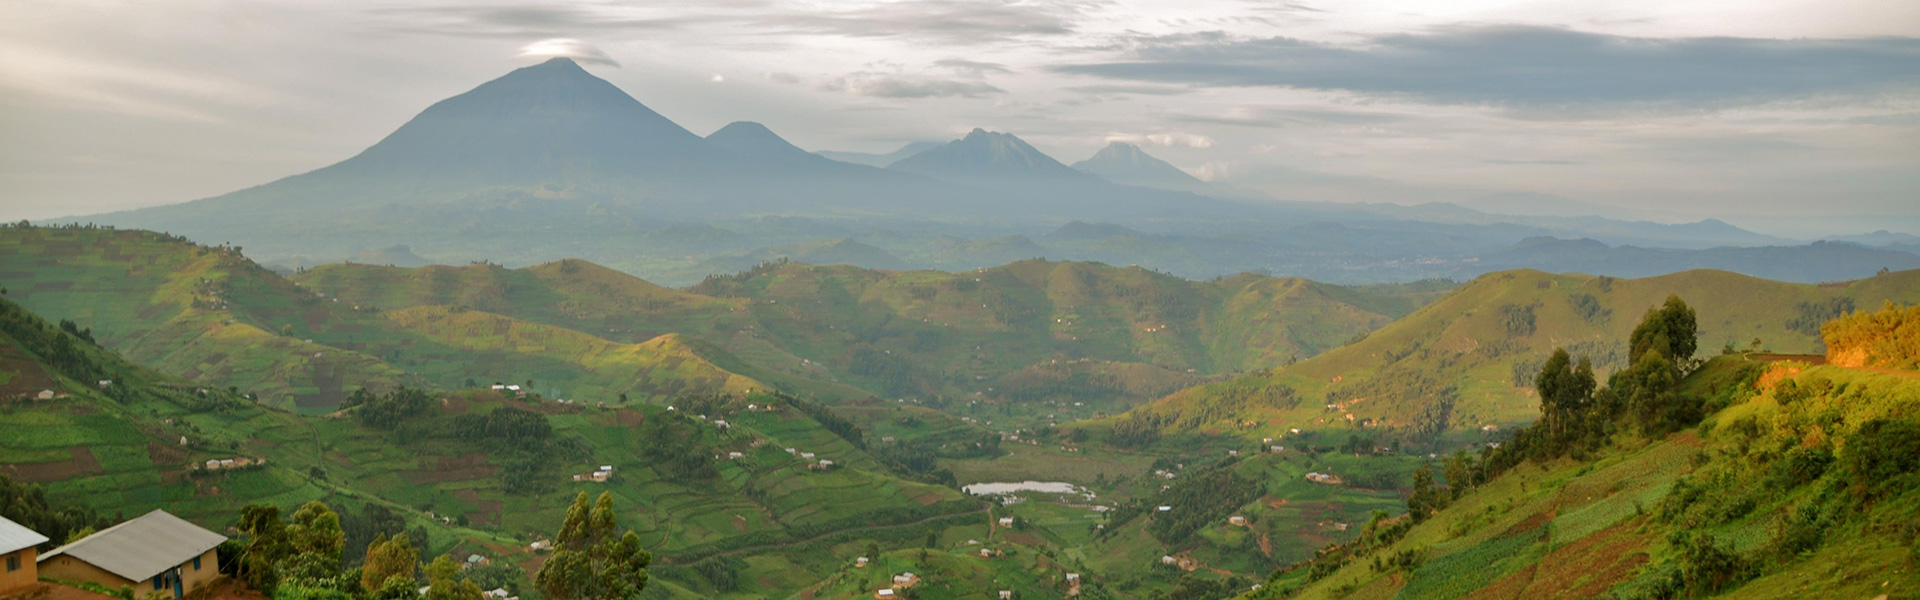 uganda-kisoro-mountains-hills-photo-marie-louise-loevland